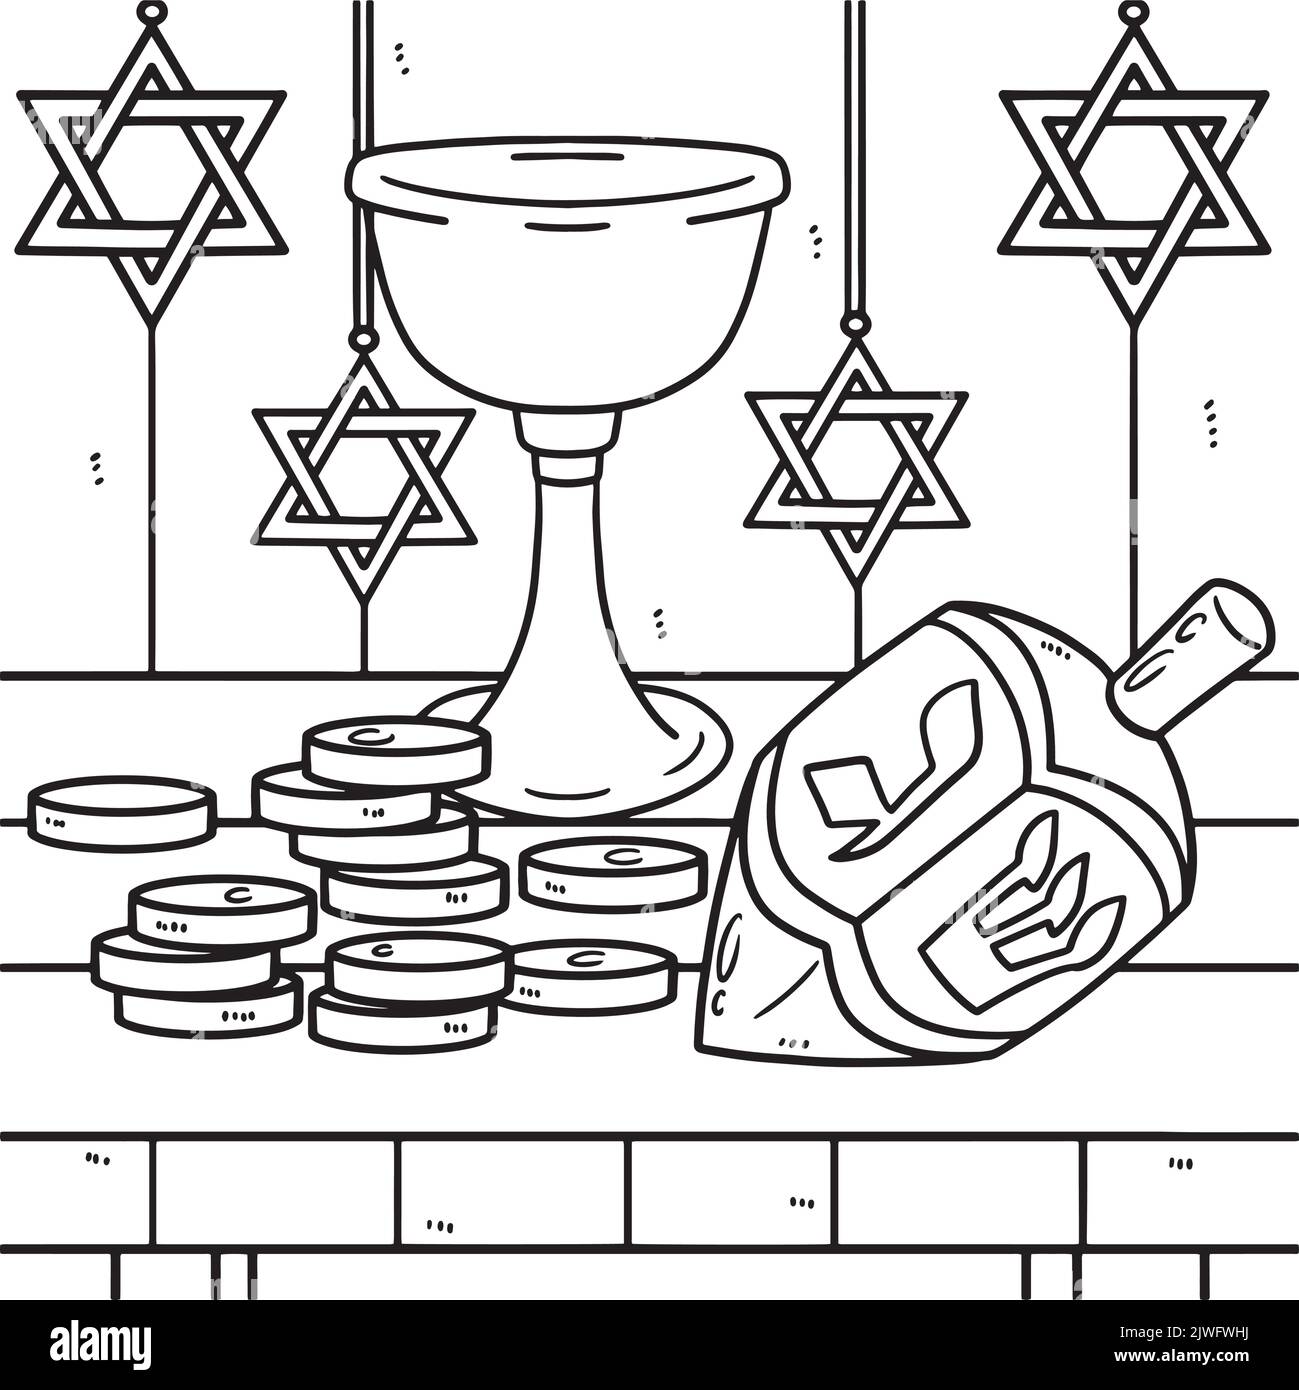 Hanukkah Dreidel, Coins and Chalice Coloring Page Stock Vector